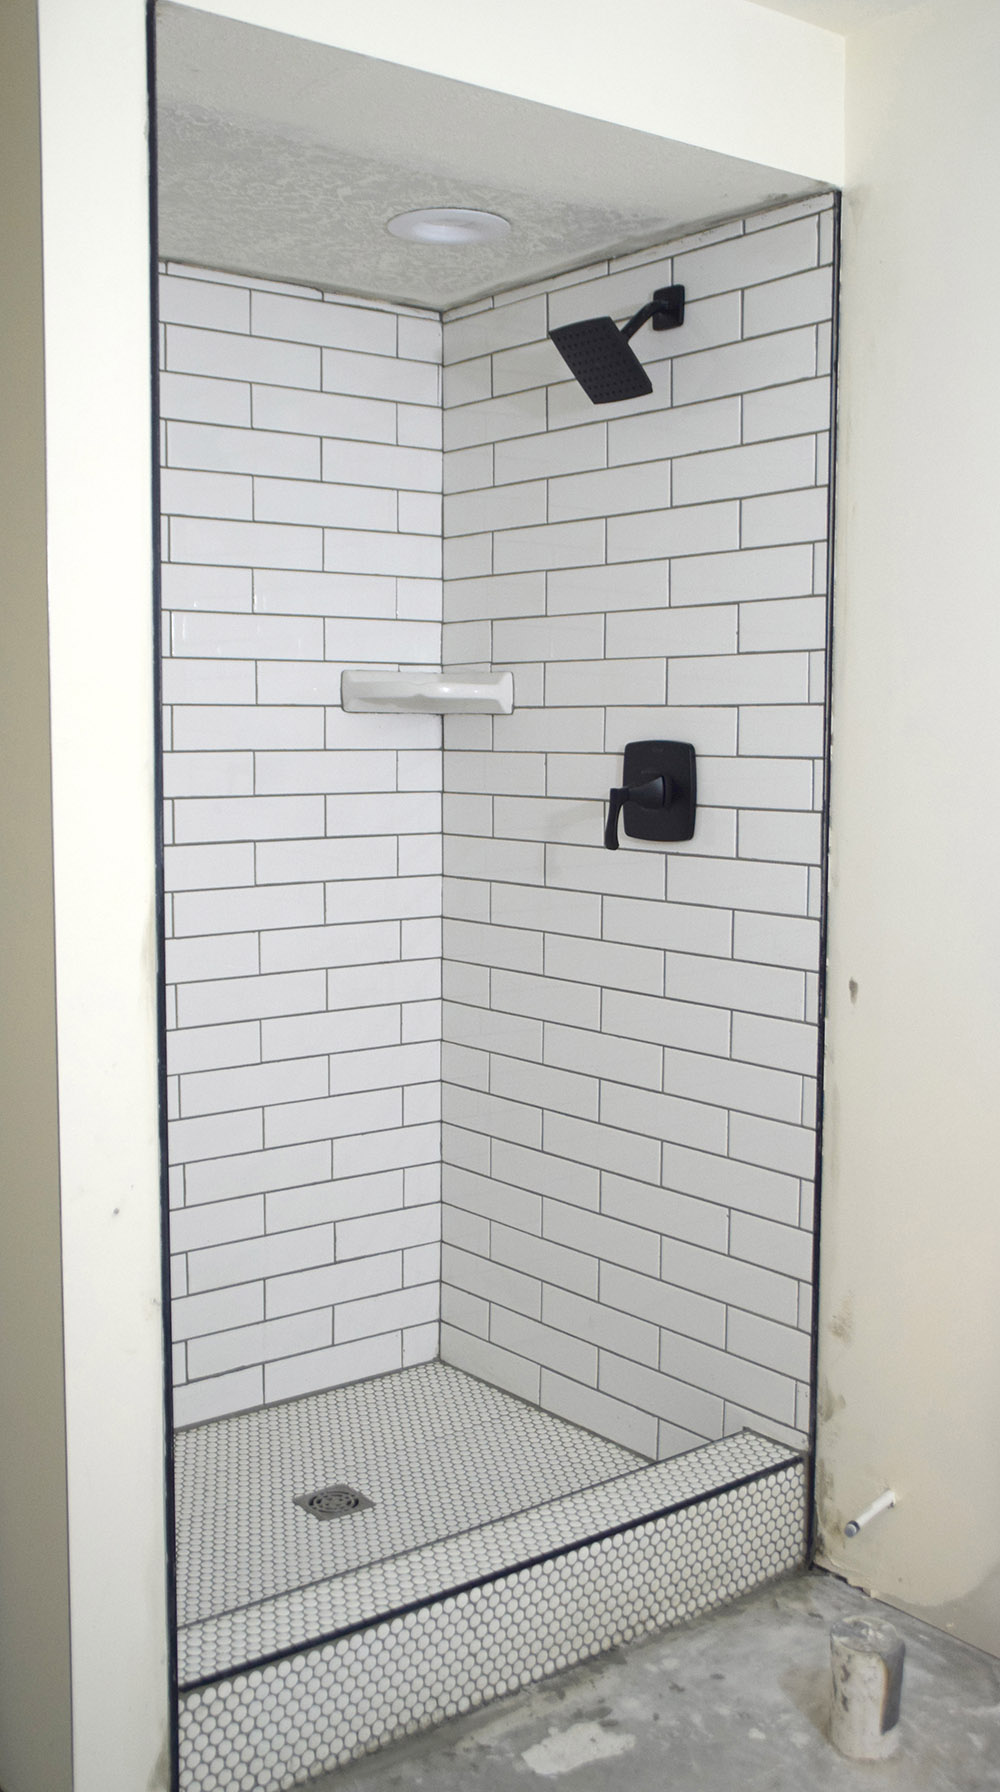 How To Tile A Basement Shower, Tiling Basement Bathroom Floor